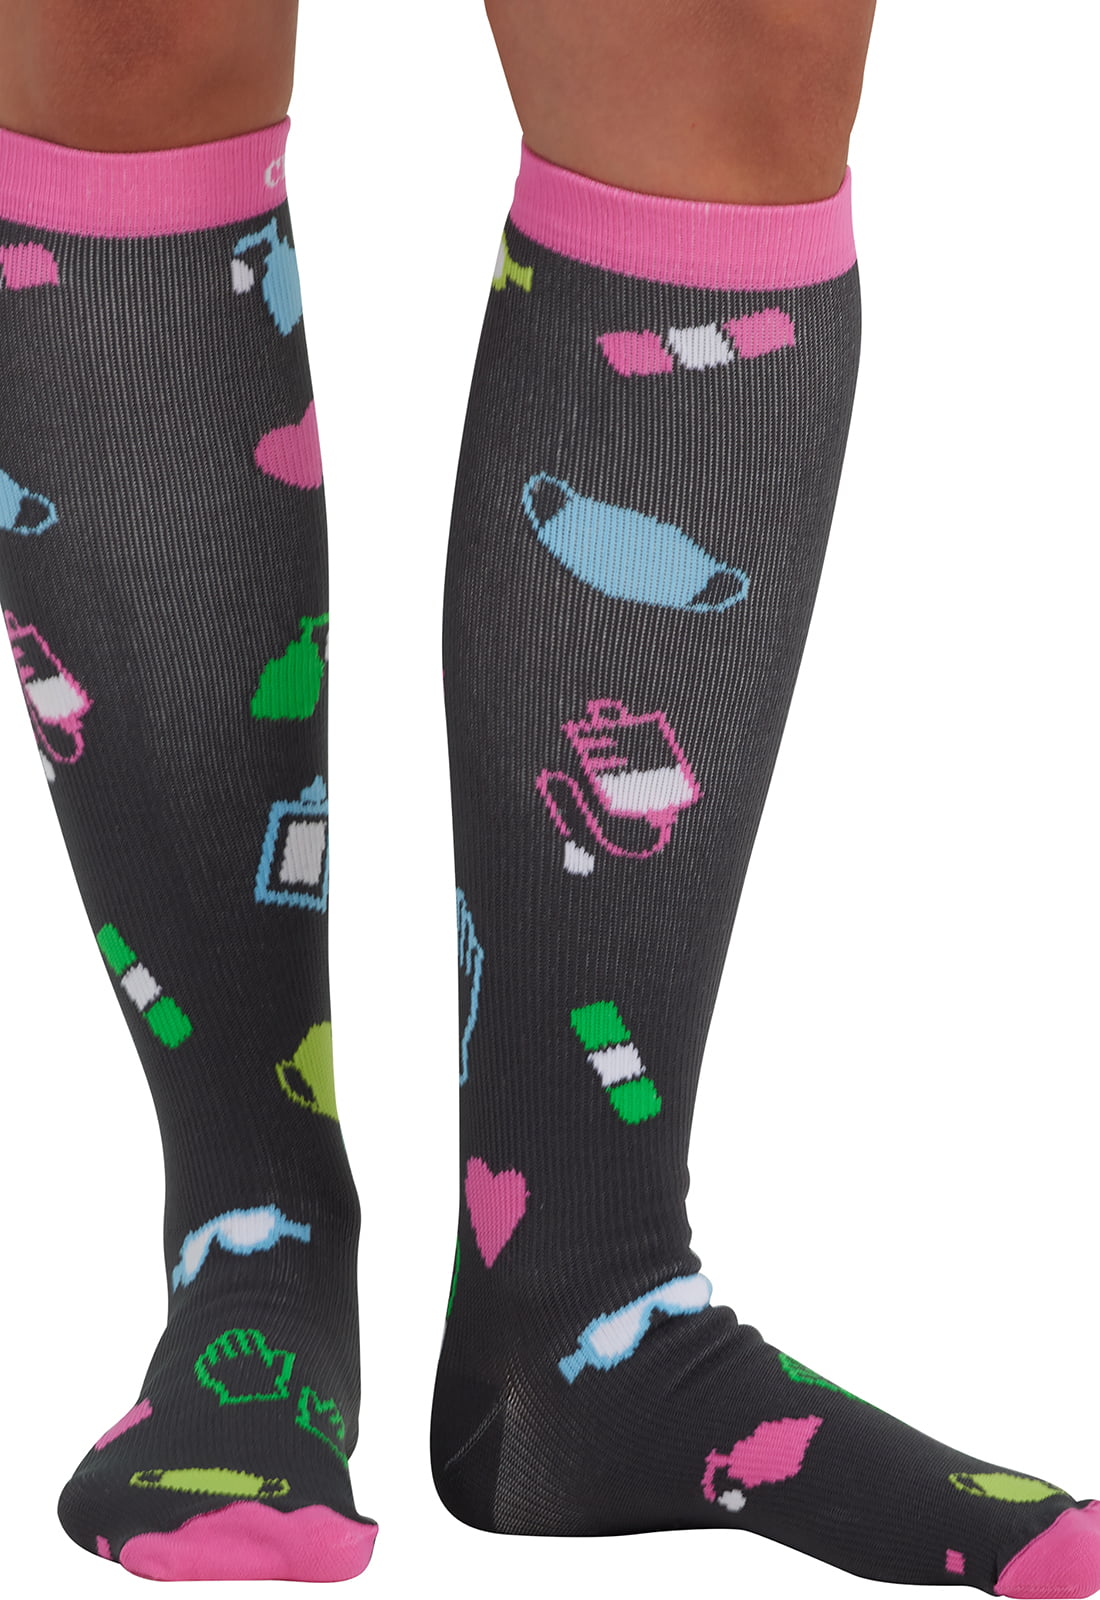 Socks Women,Colorful Tie Dye Compression Socks Soccer Socks High Socks Long Socks, Clearance 